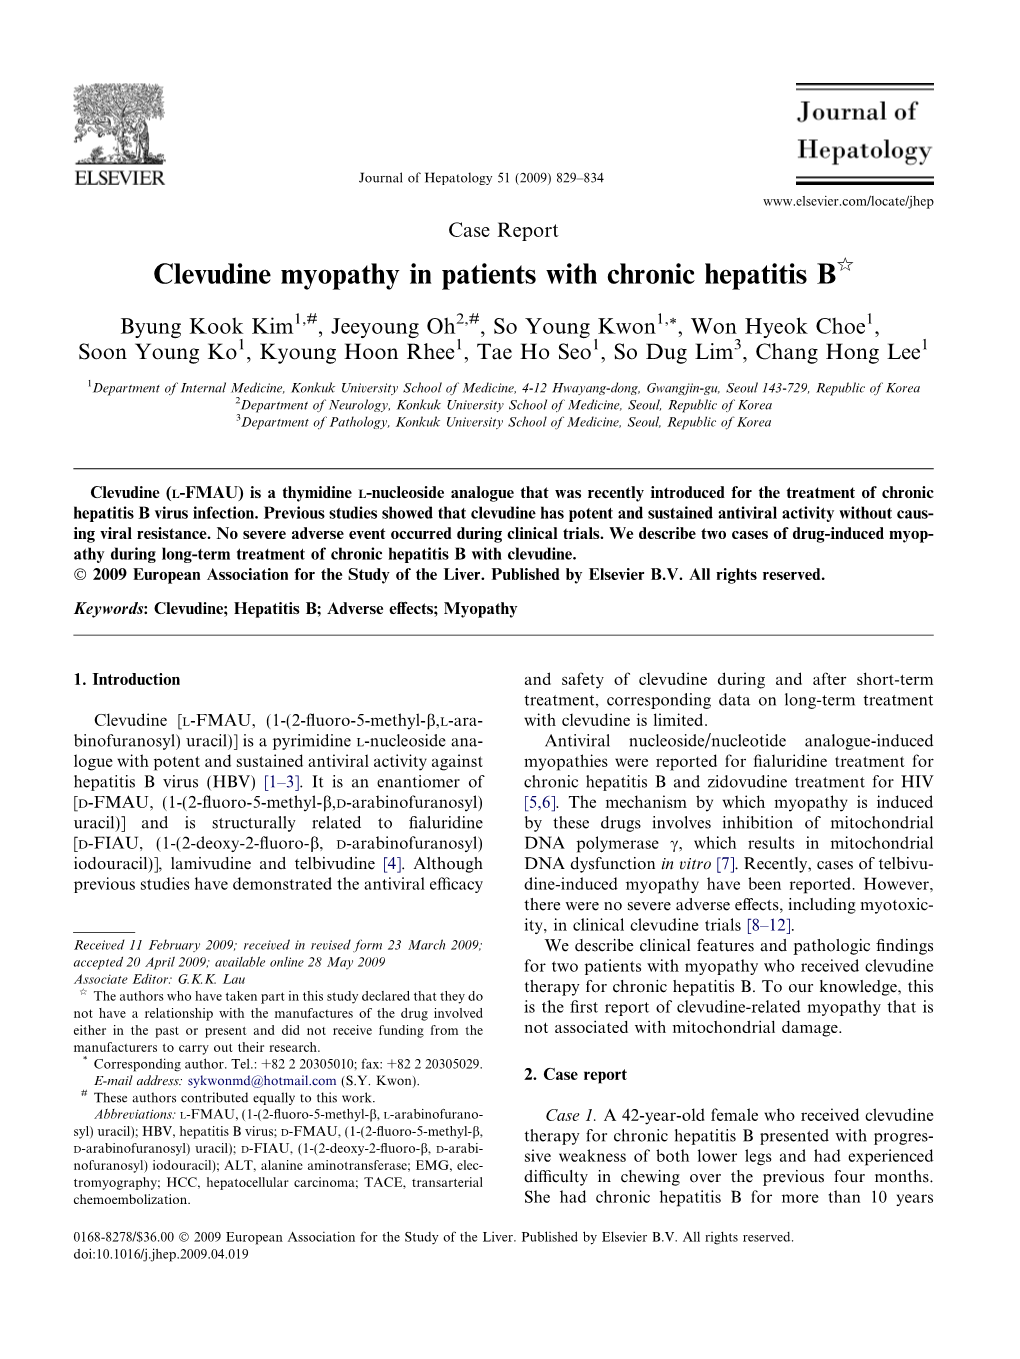 Clevudine Myopathy in Patients with Chronic Hepatitis Bq